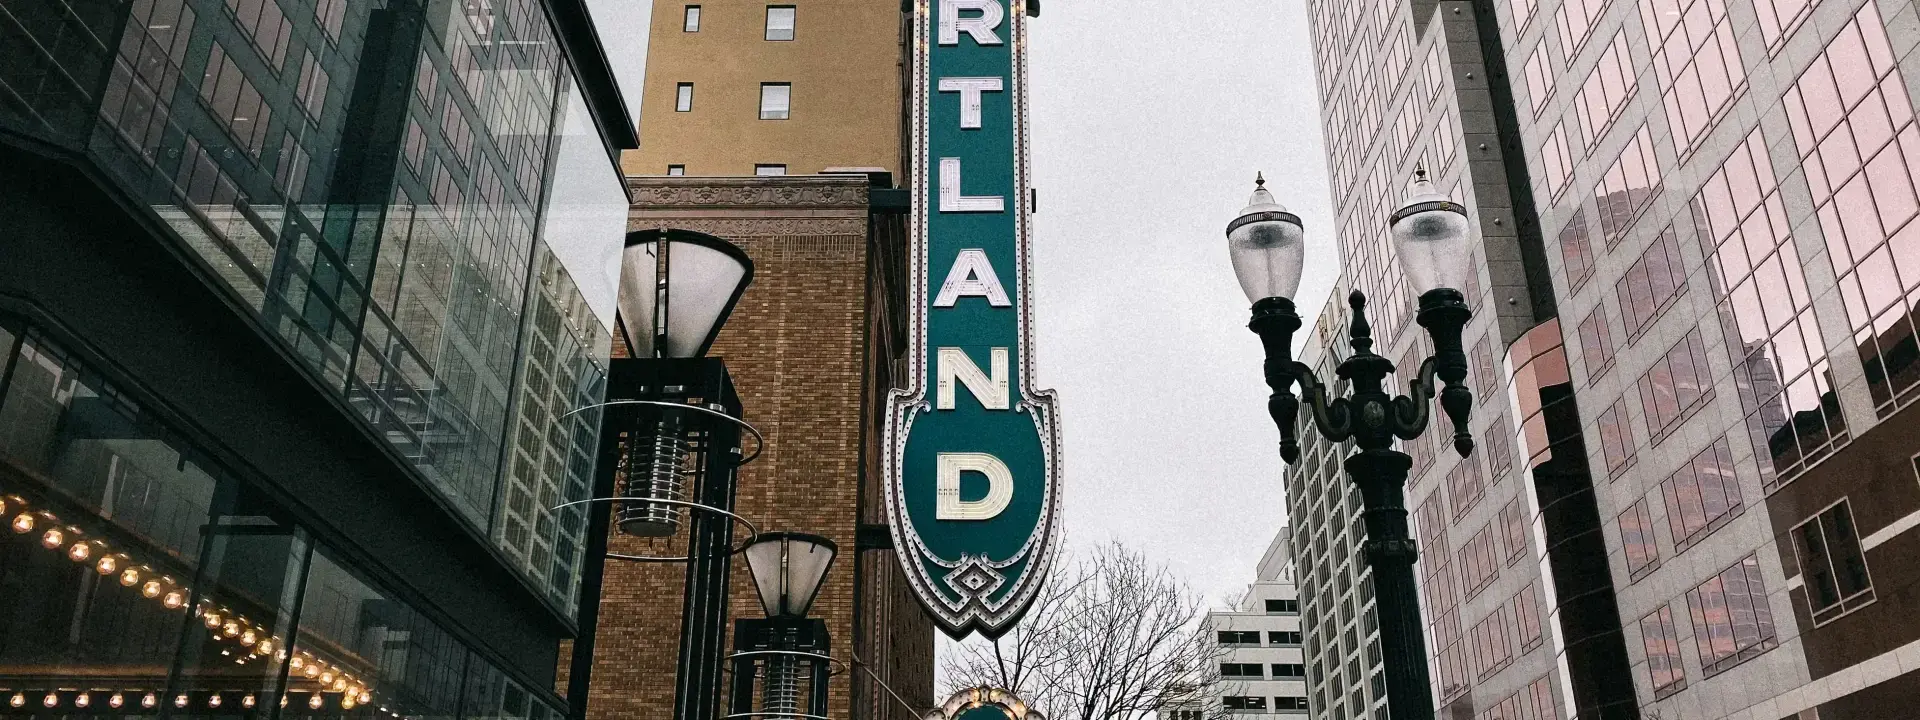 Portland United States of America